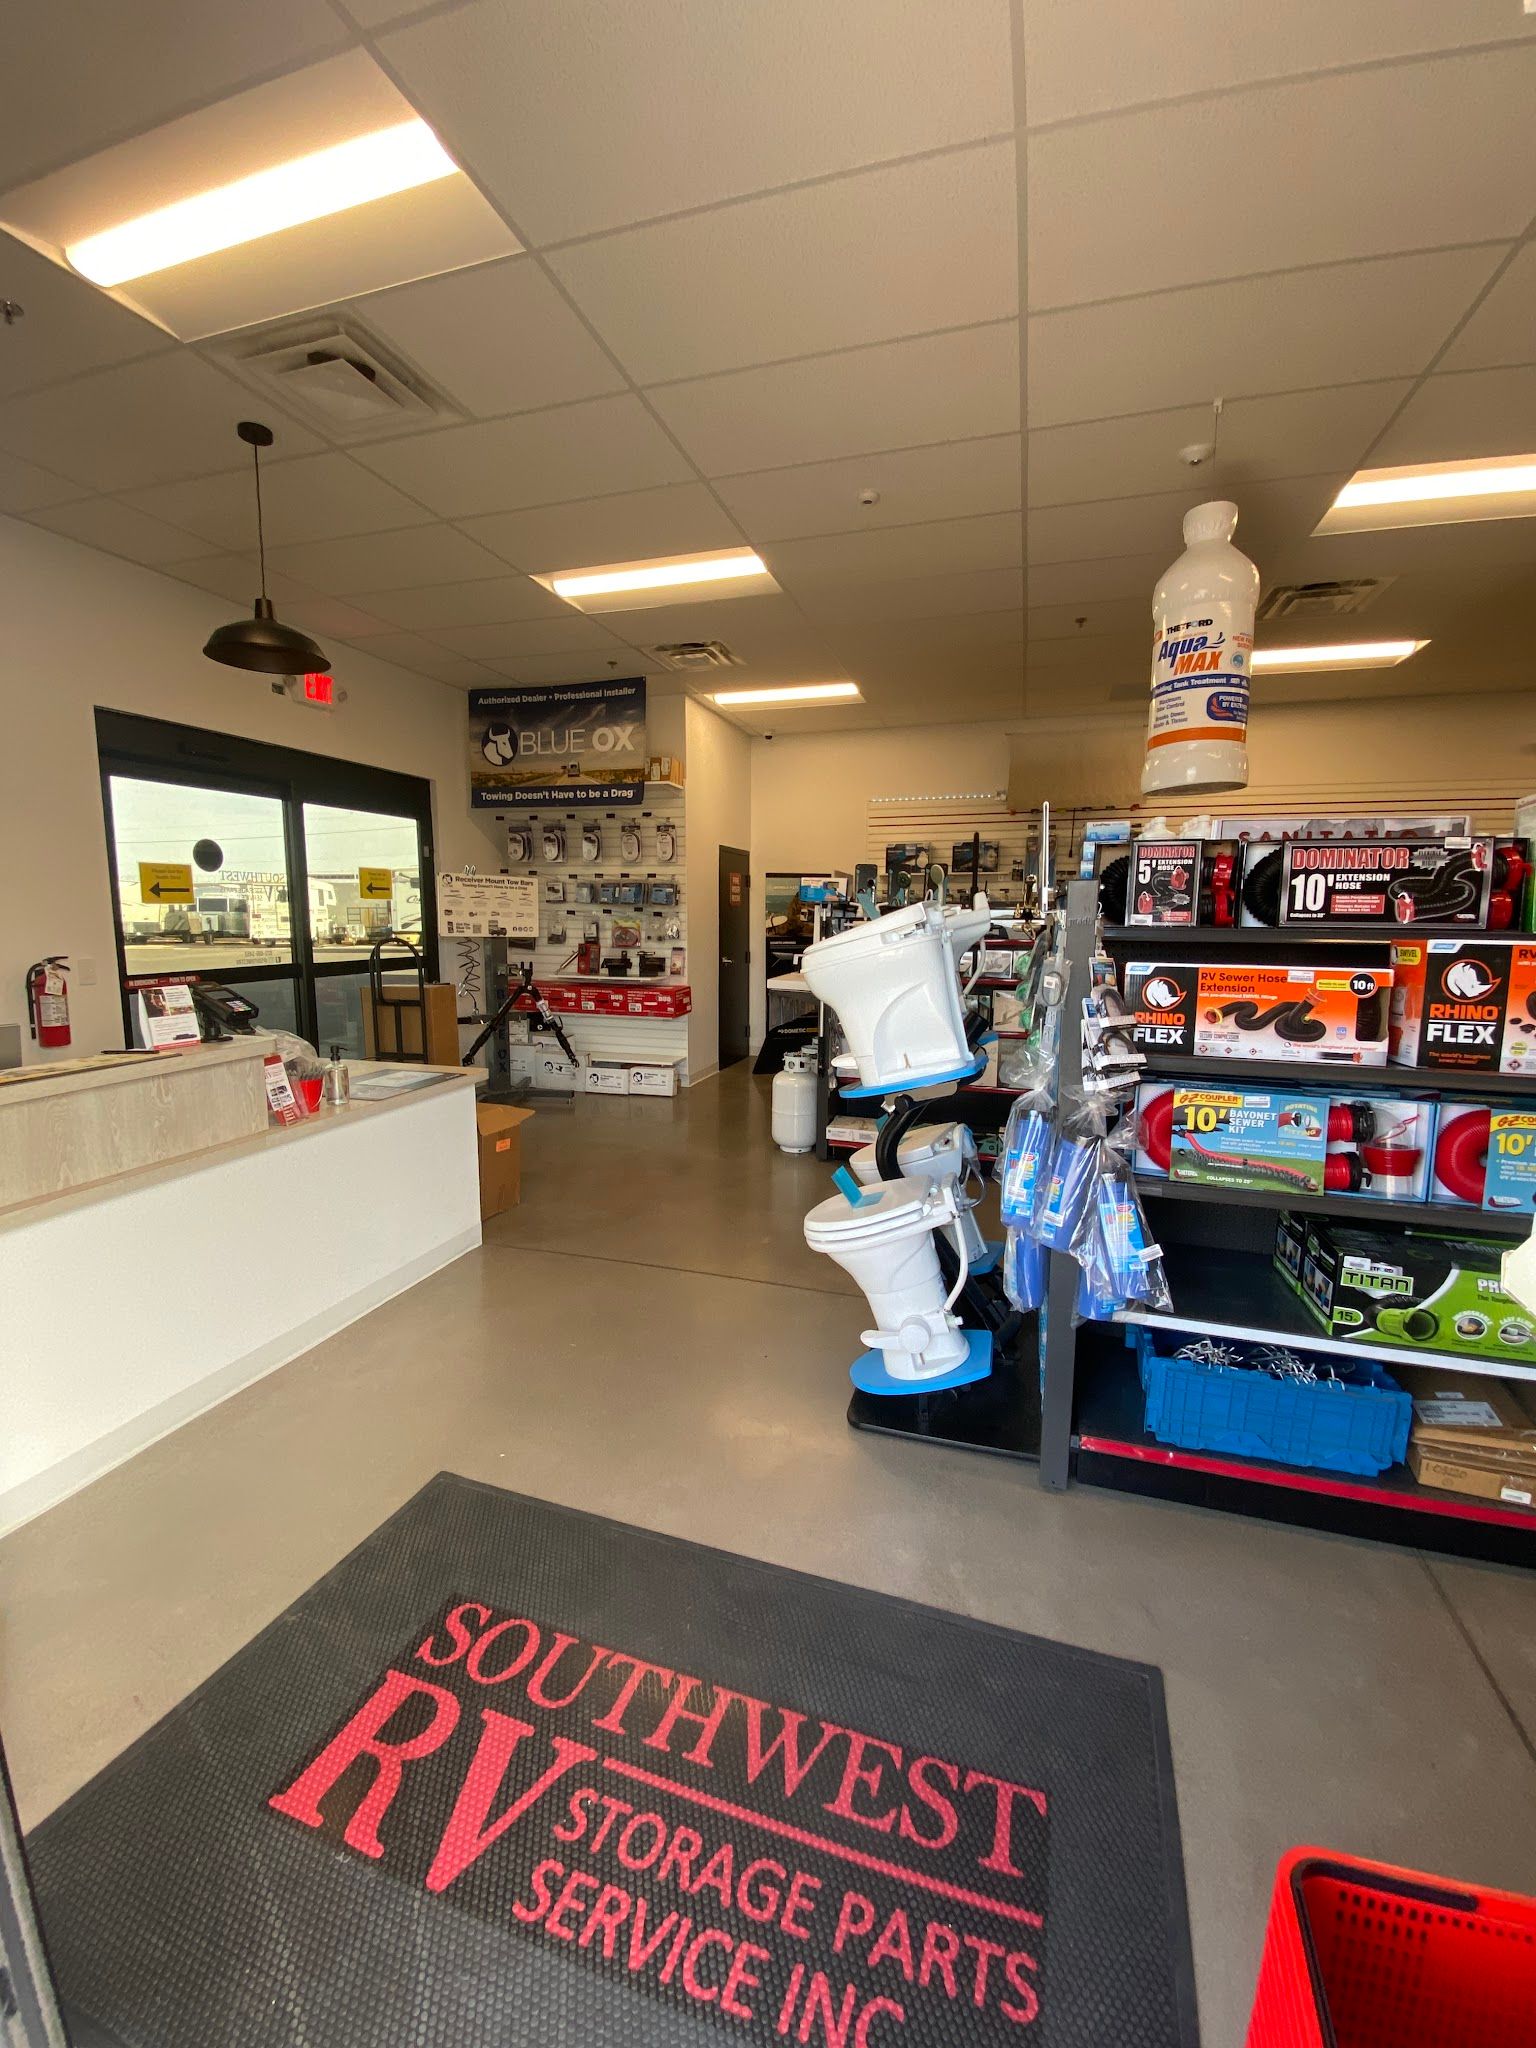 Services & Products Southwest RV Storage Parts Service in Glendale AZ